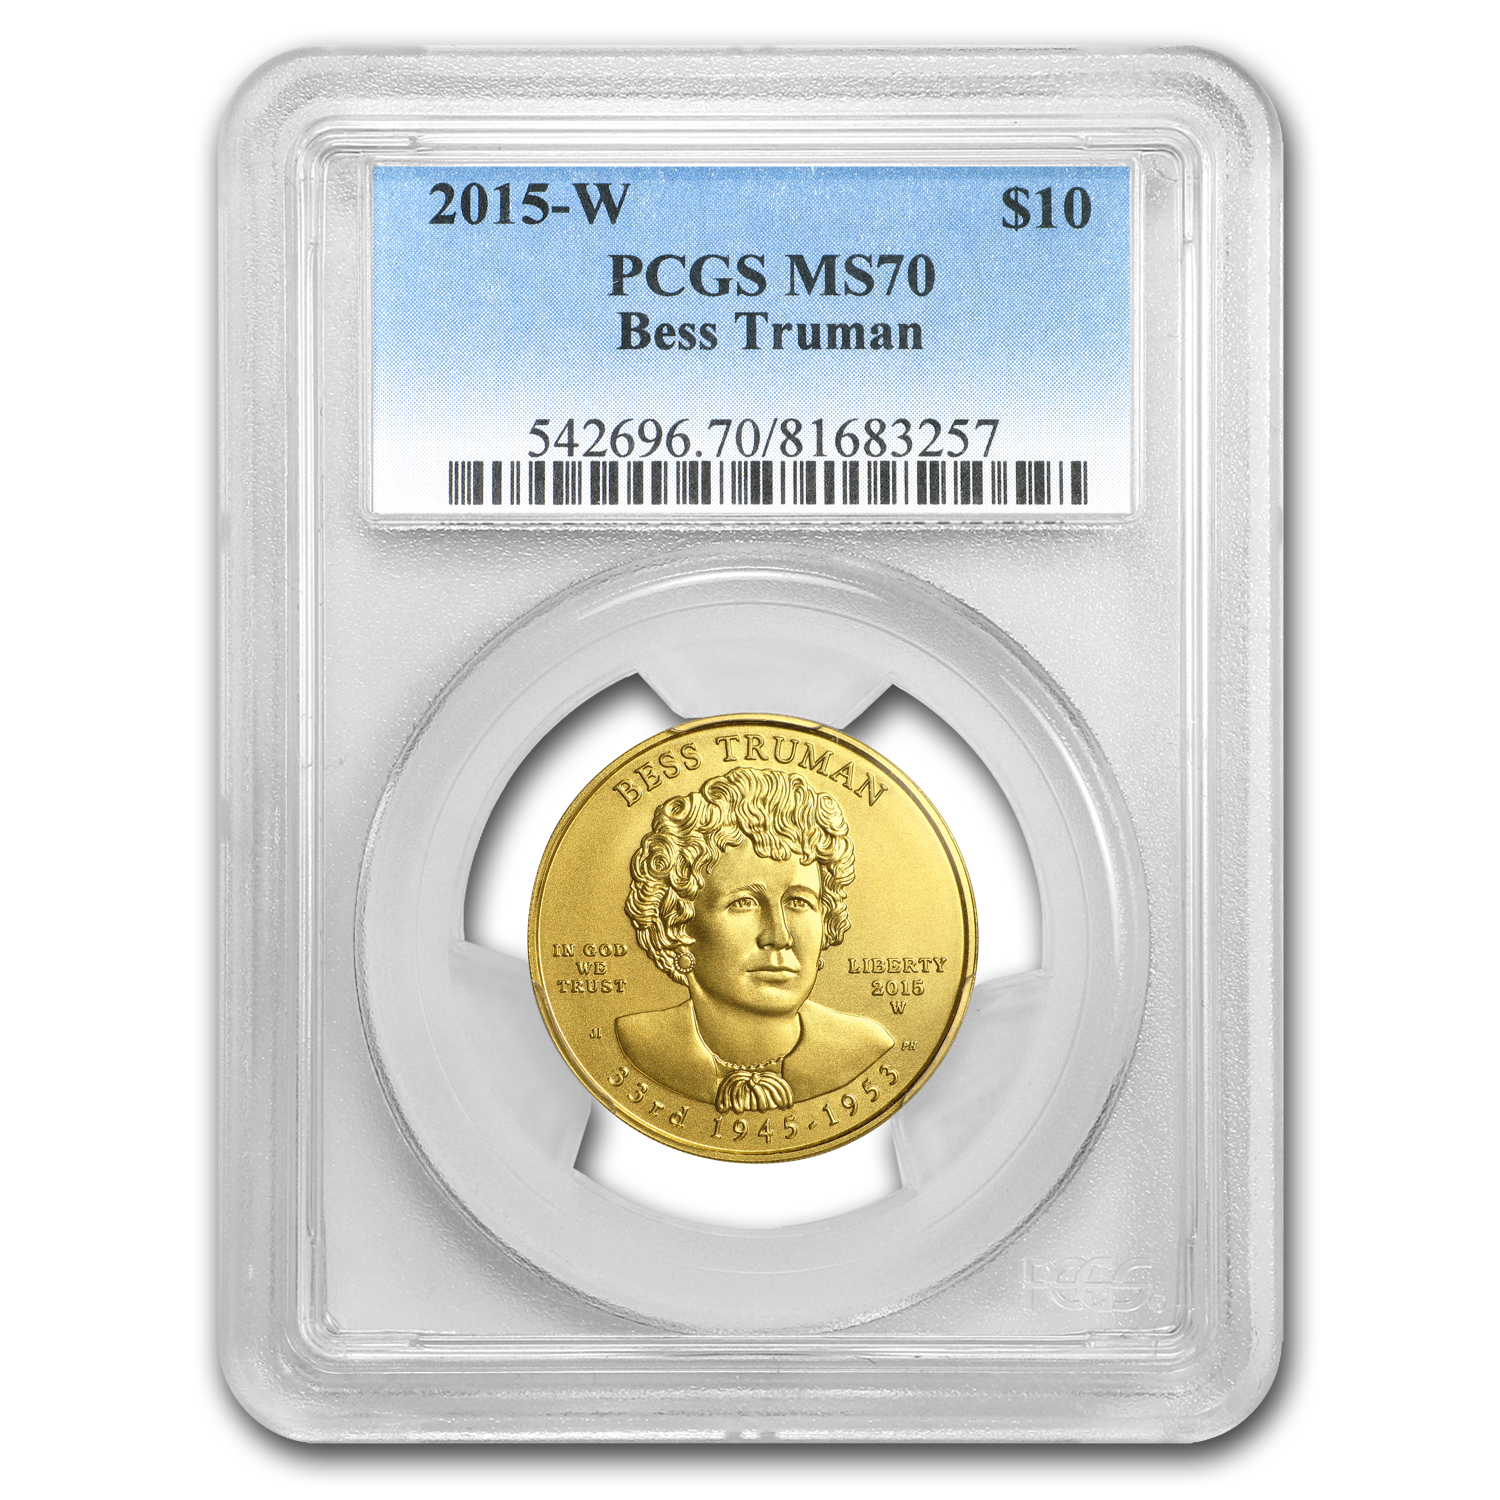 Buy 2015-W 1/2 oz Gold Bess Truman MS-70 PCGS